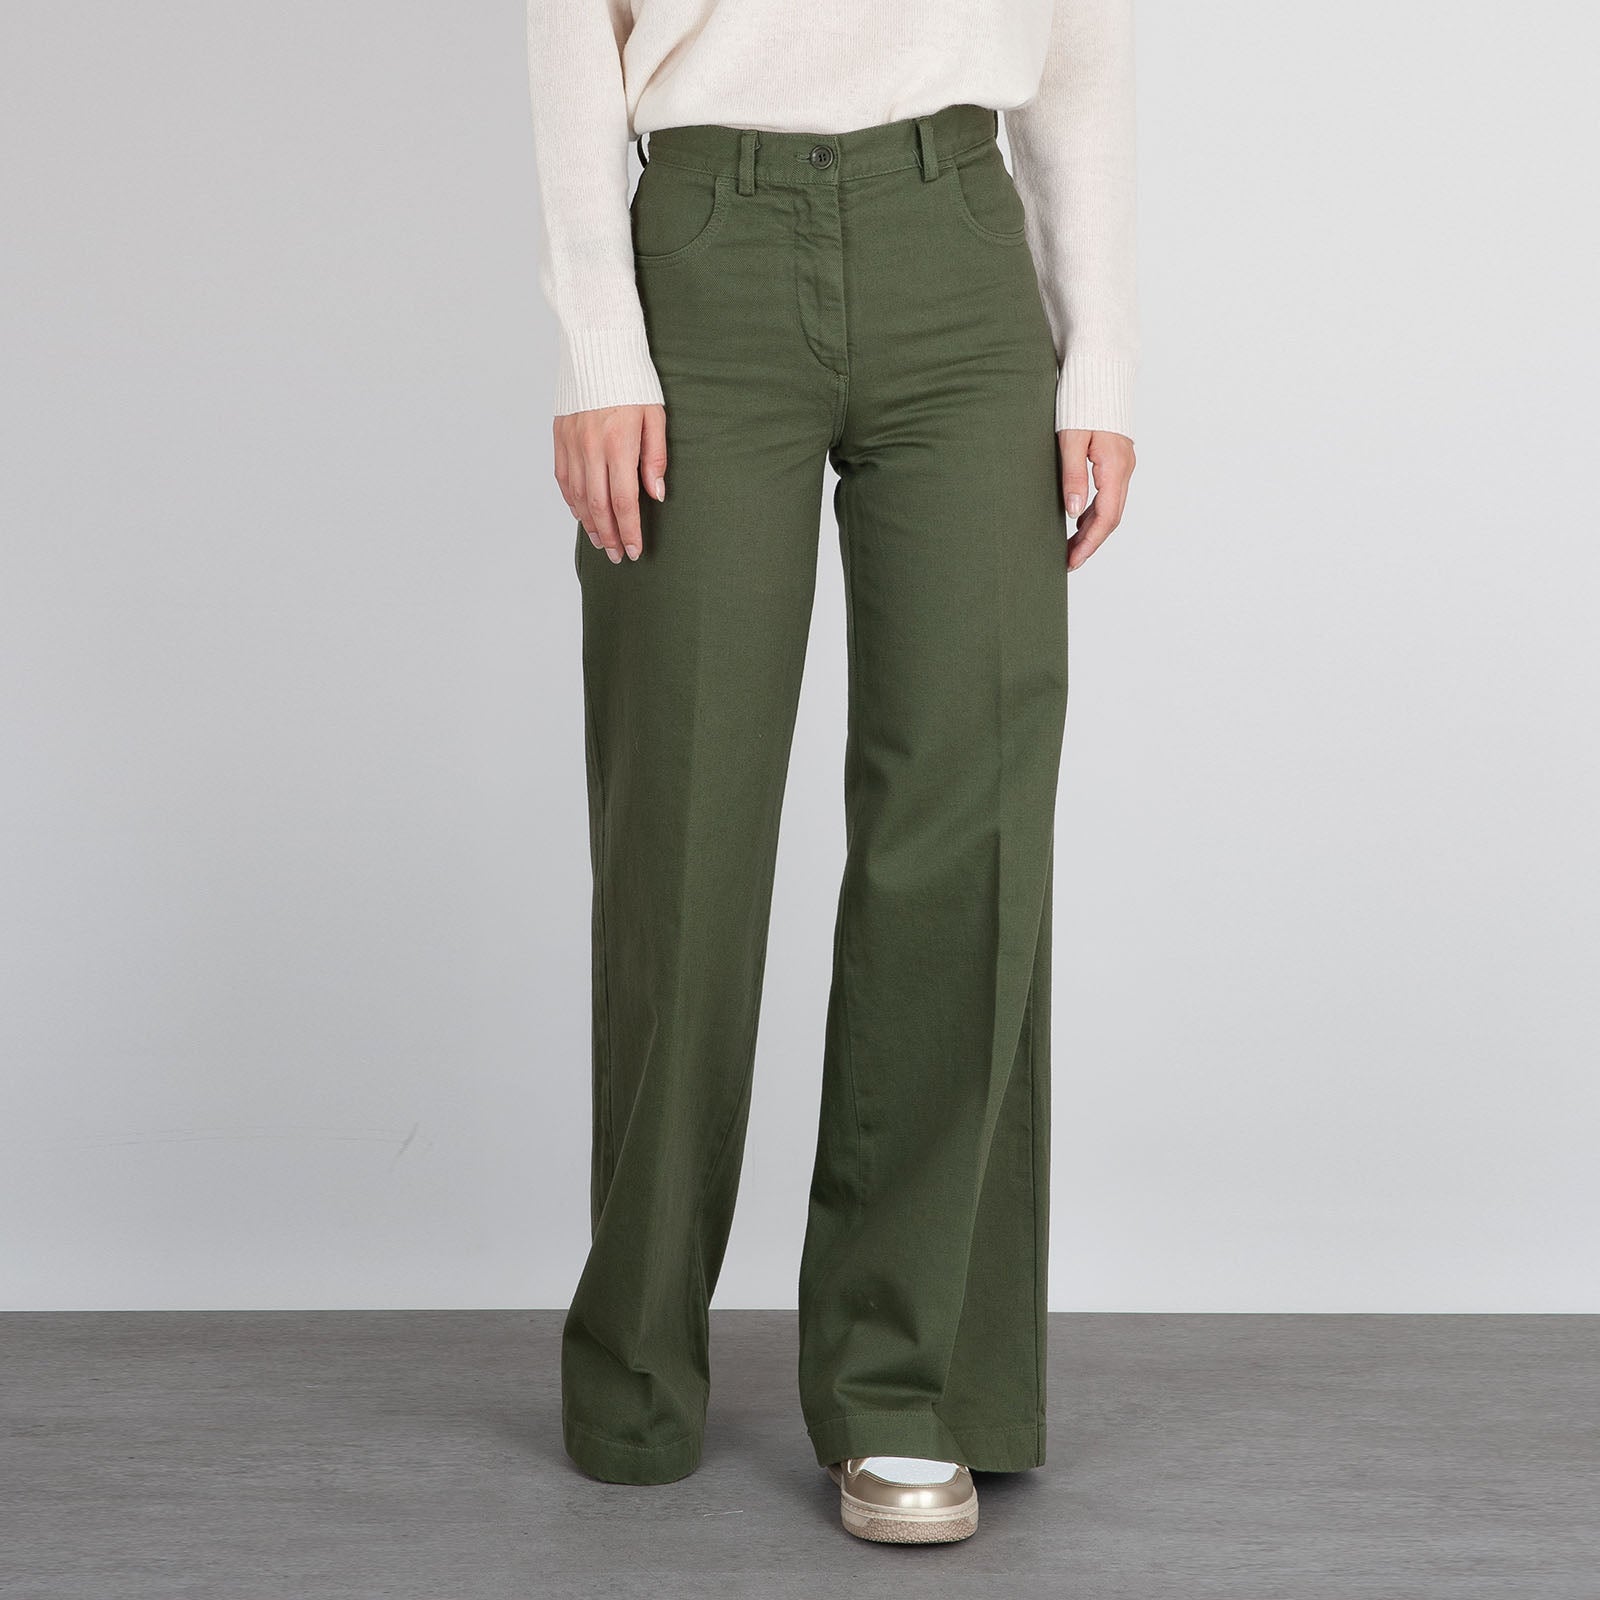 Aspesi Pantalone Ampio Verde Militare in Cotone - 7